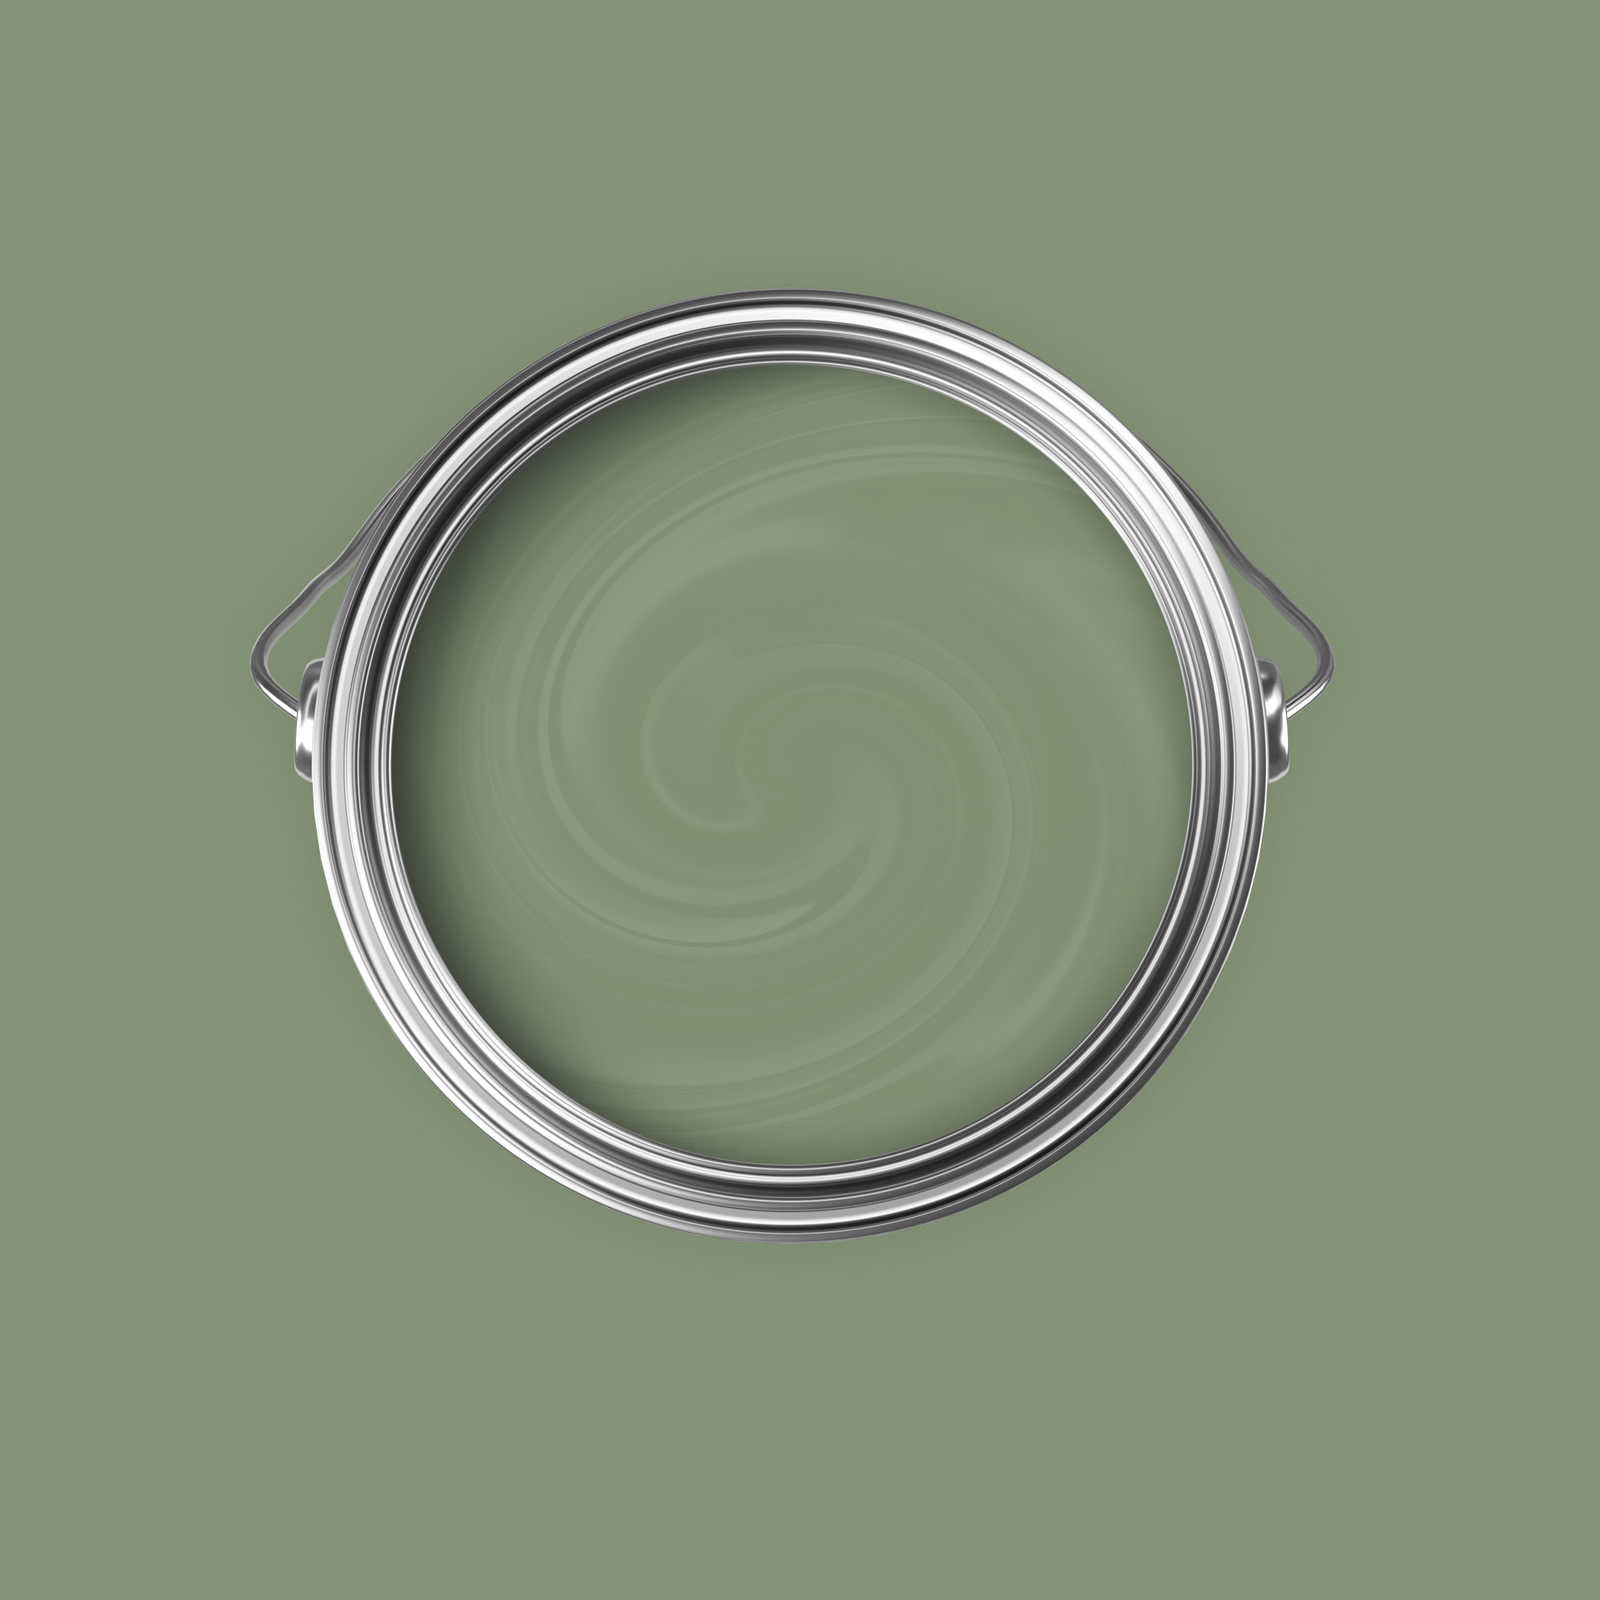             Peinture murale Premium vert olive naturel »Gorgeous Green« NW503 – 5 litres
        